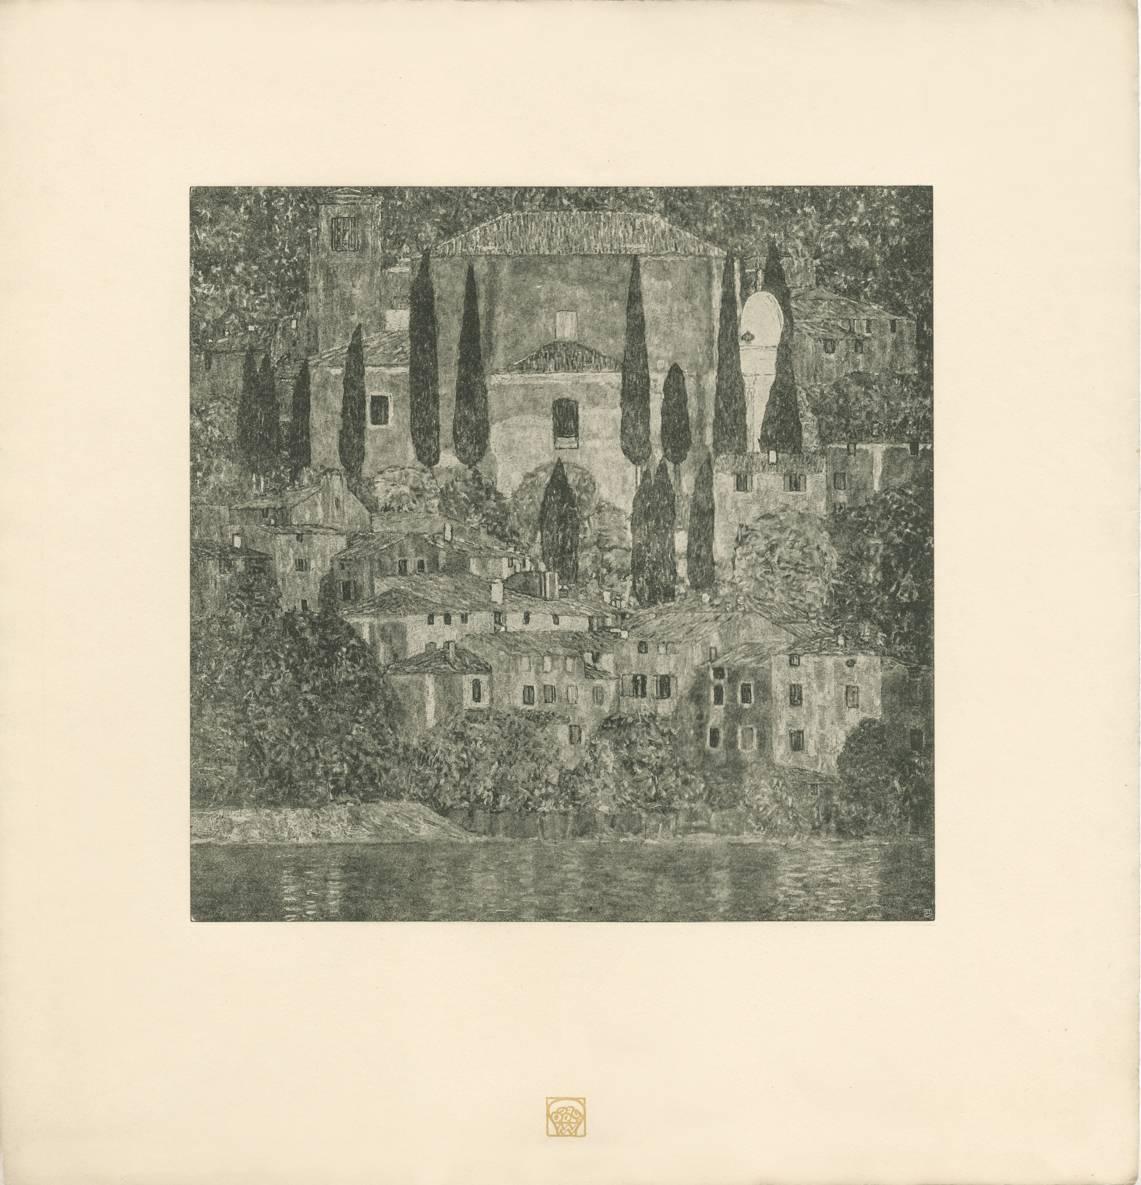 H.O. Miethke Das Werk folio "Church in Cassone" collotype print